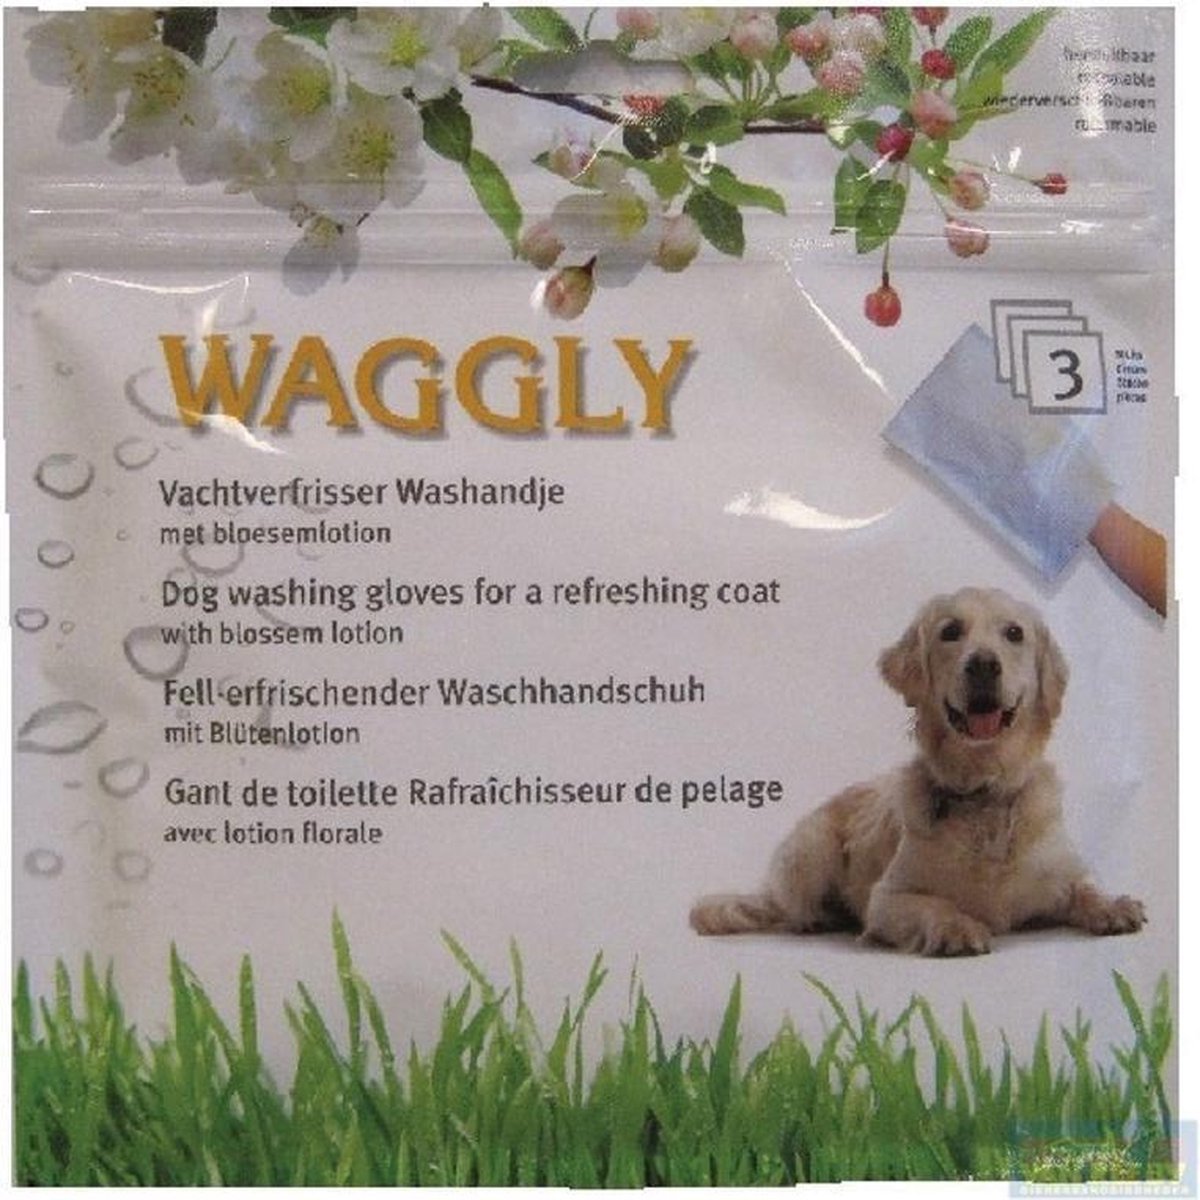 Beg Standaard grind Waggly Vachtverfrisser Washand - Hond - Met bloesemlotion - 3 x 3 washandjes  | bol.com